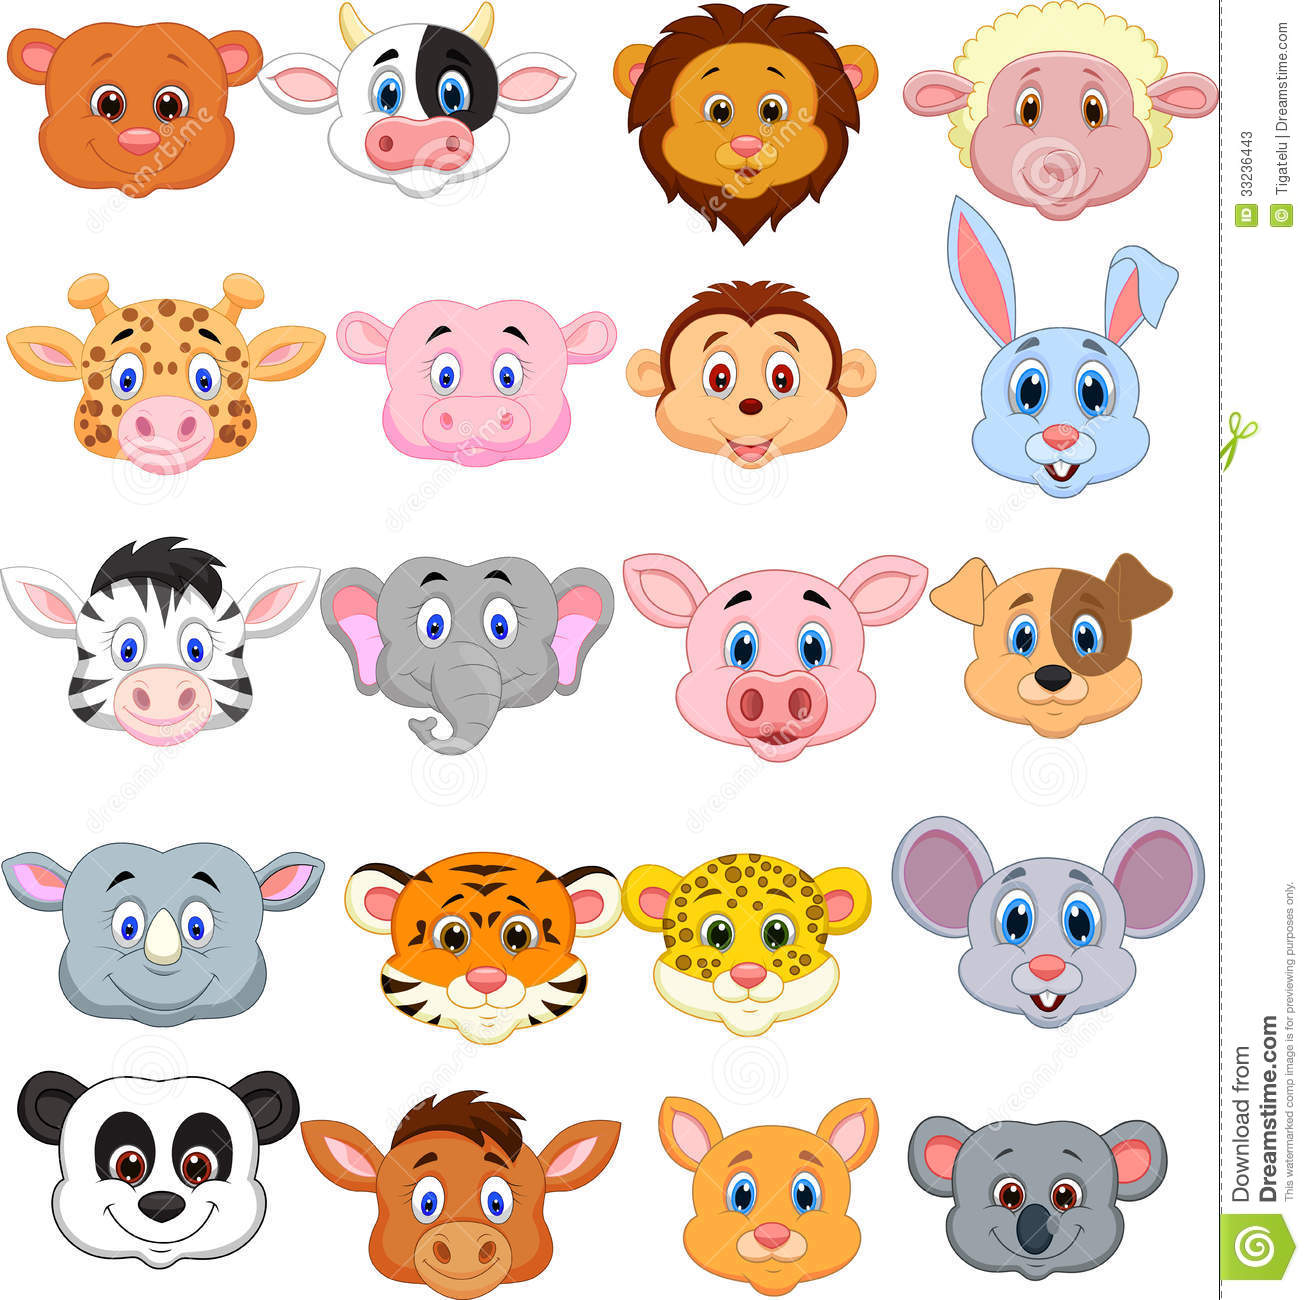 Cartoon Animal Head Icon Stock Photos   Image  33236443